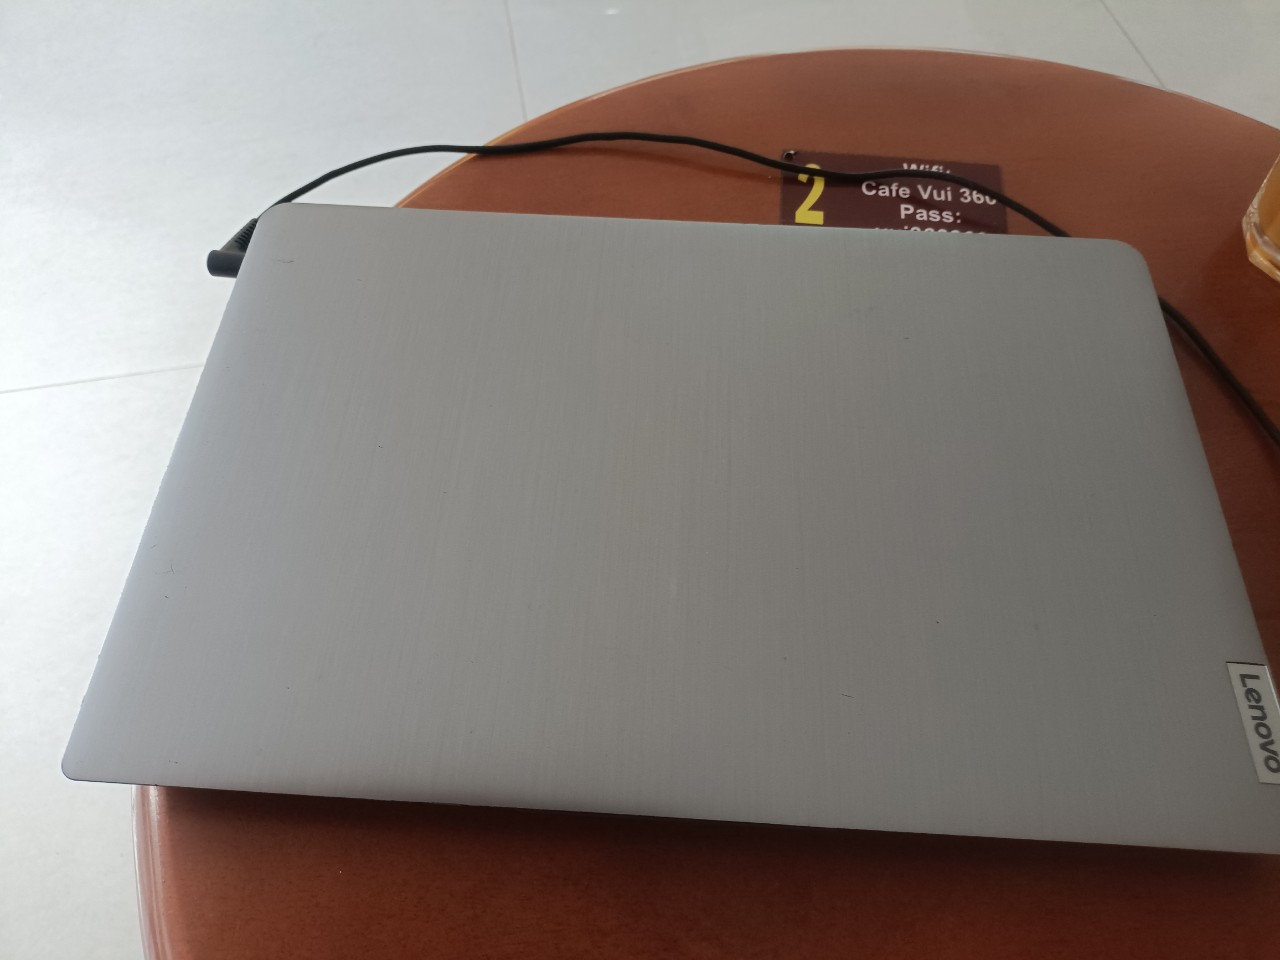 Laptop Lenovo i5 1135 8g/256/15.6